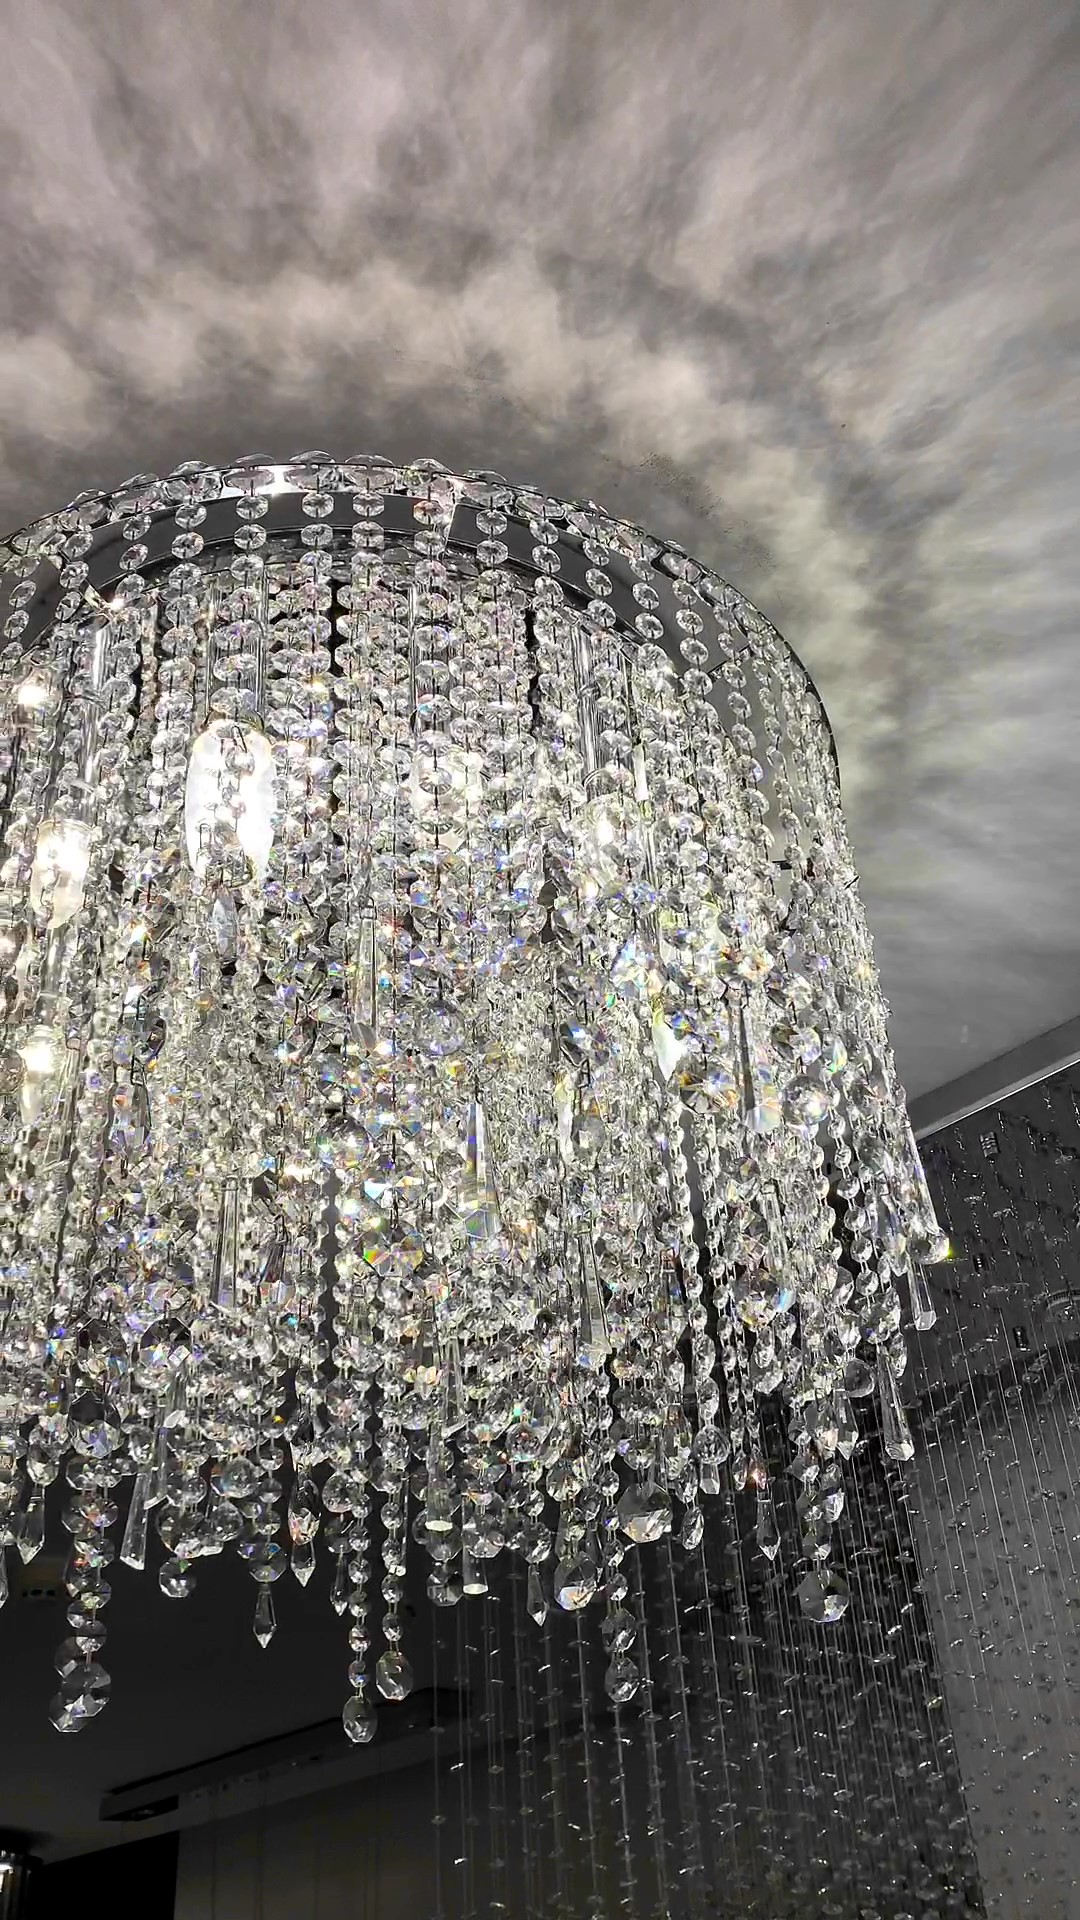 Modern Chandelier lighting low ceiling beads chain luxury lighting crystal chandelier